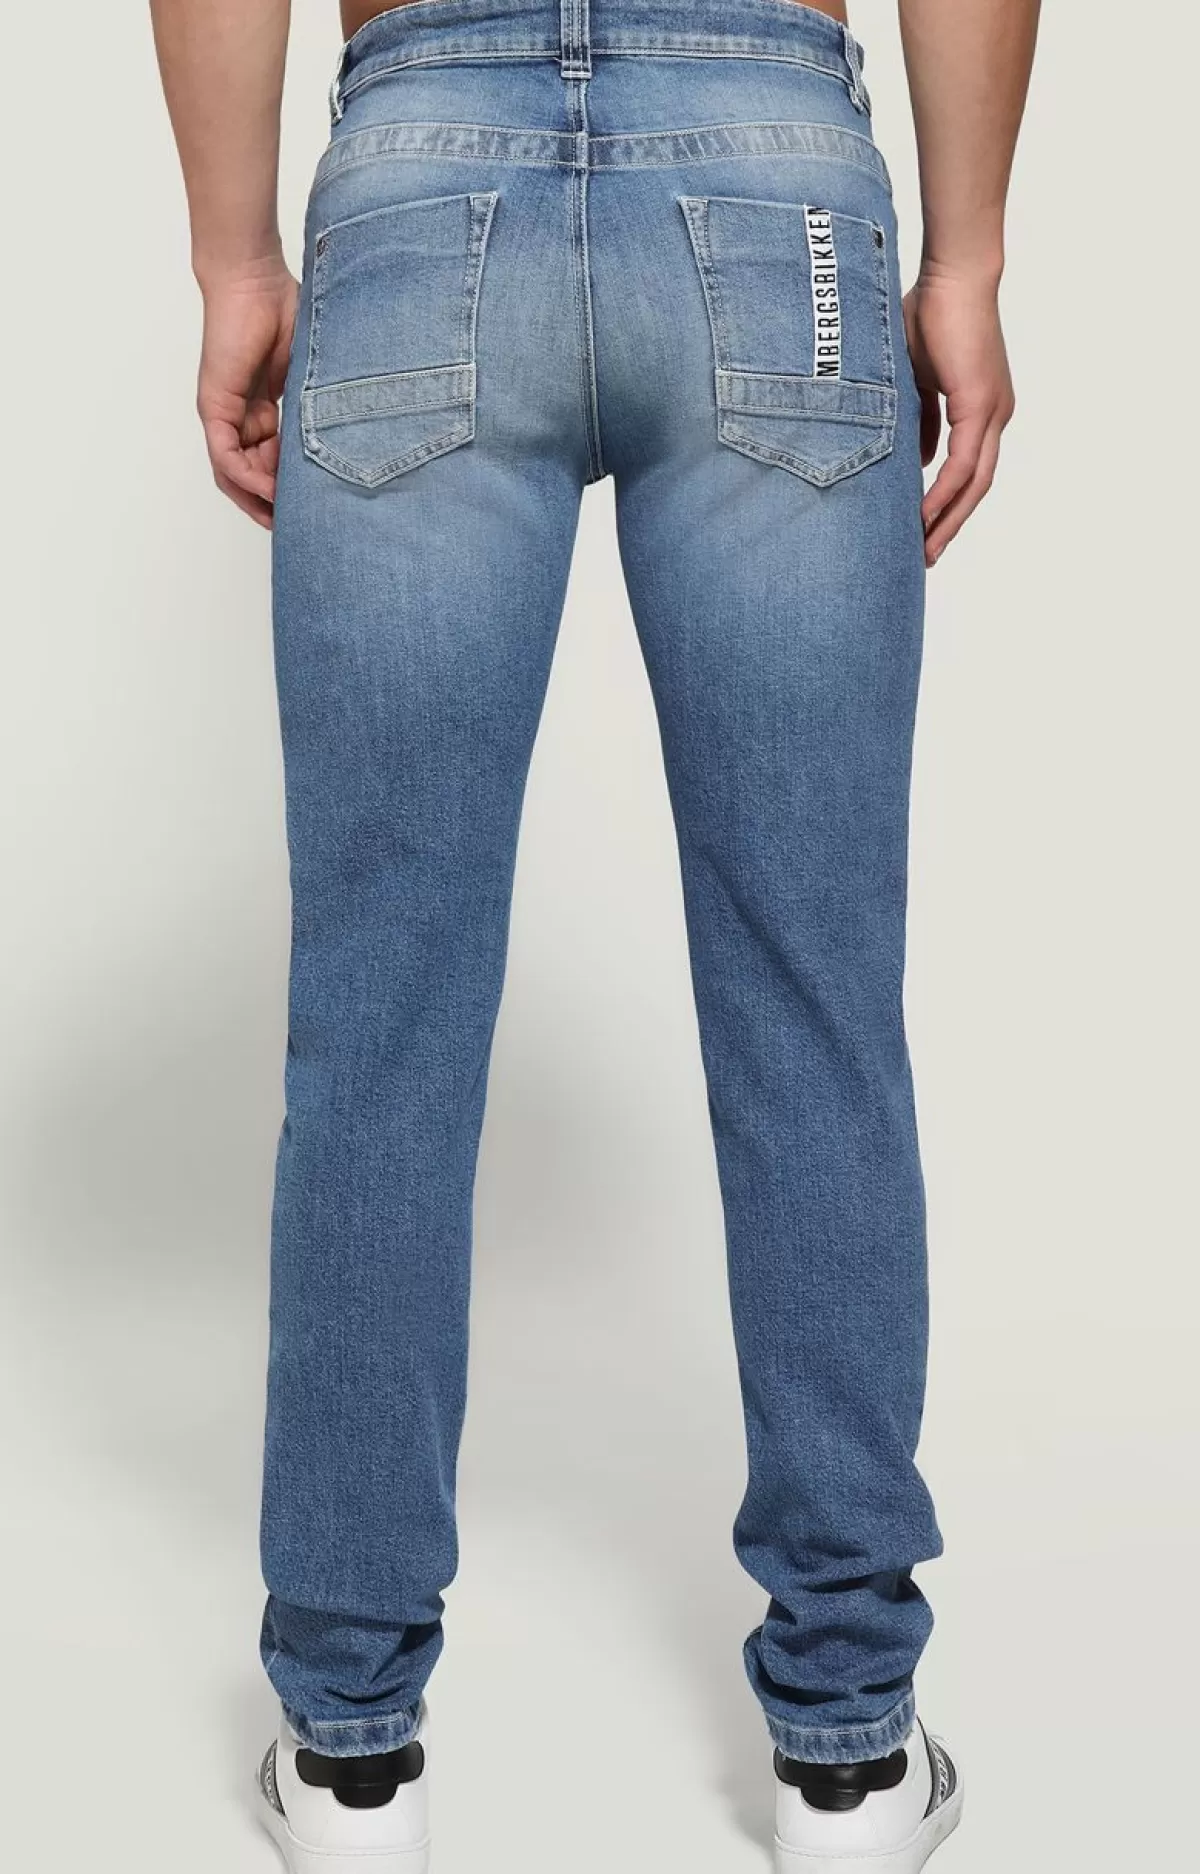 Bikkembergs Men'S Slim Fit Jeans With Tape Blue Denim Best